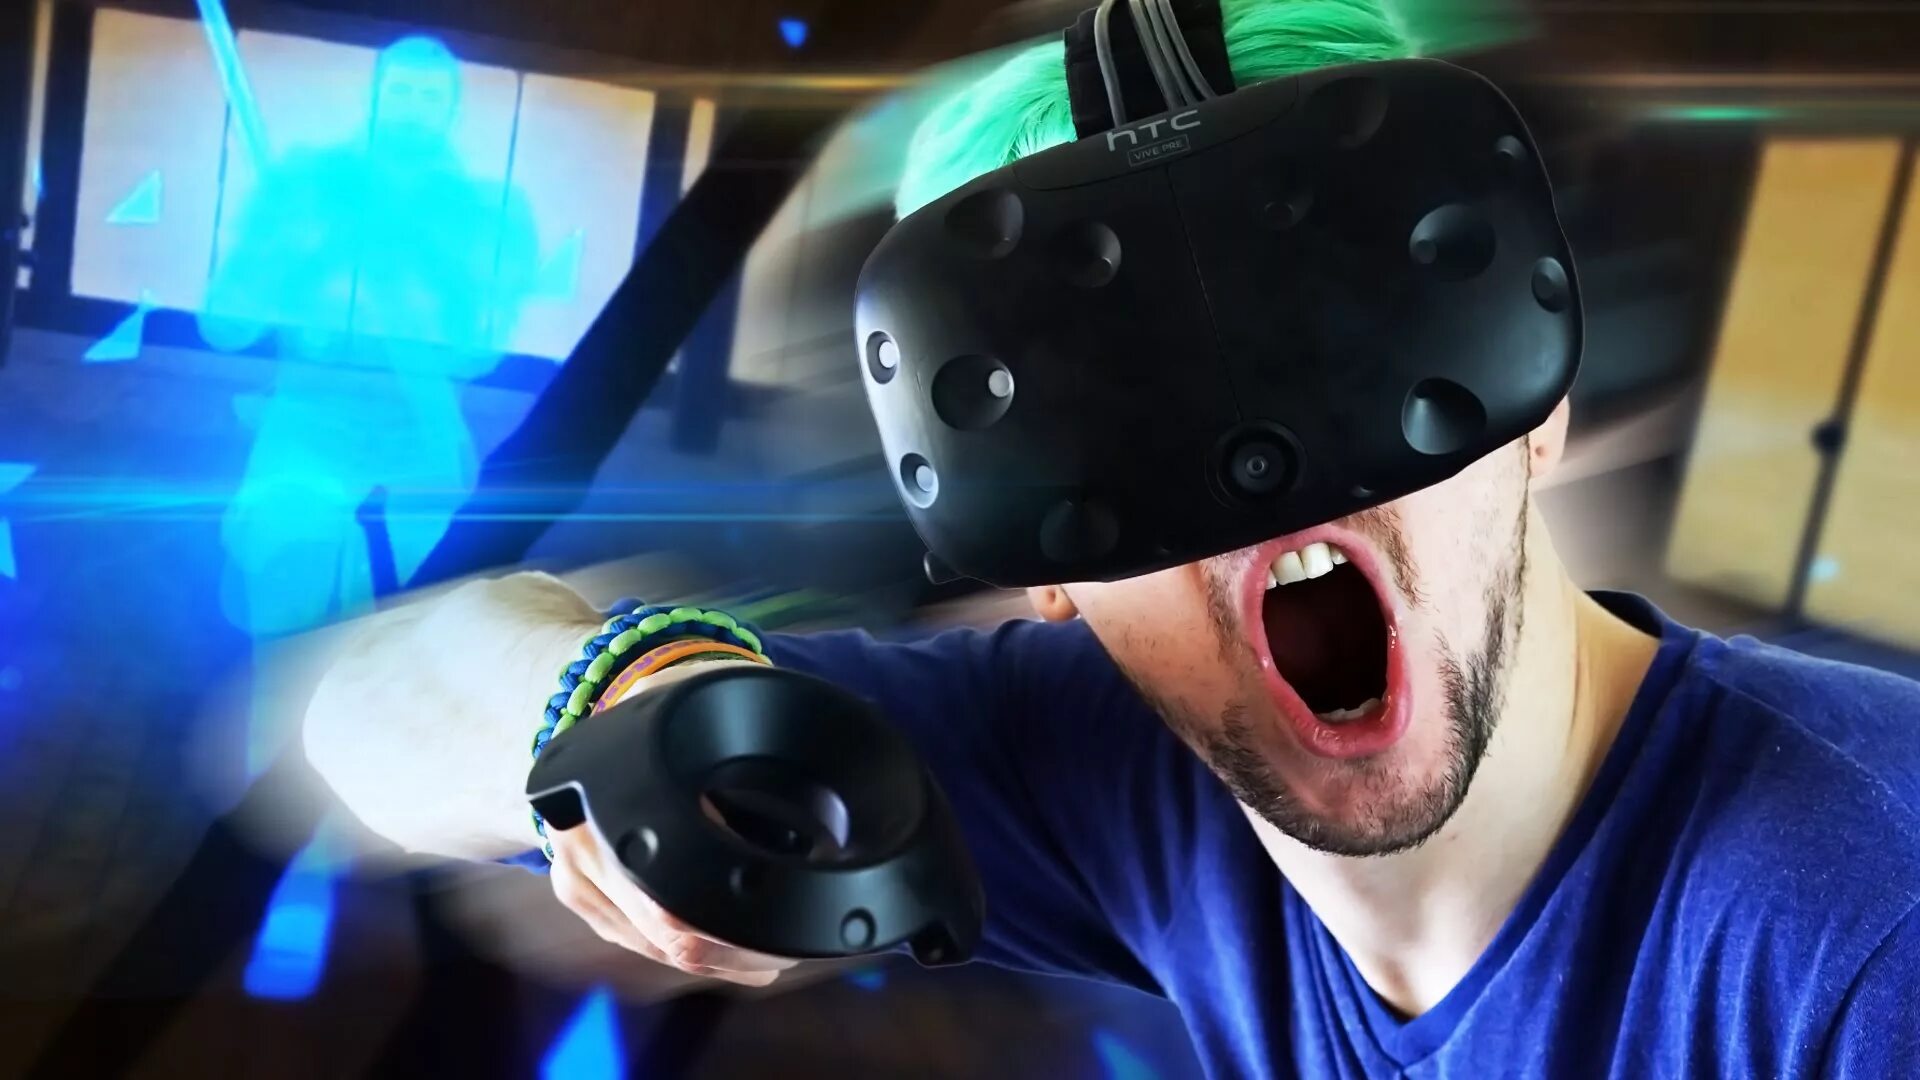 HTC VR. Виртуальная реальность HTC Vive. Шлем Oculus Quest 2. Человек в виртуальной реальности.